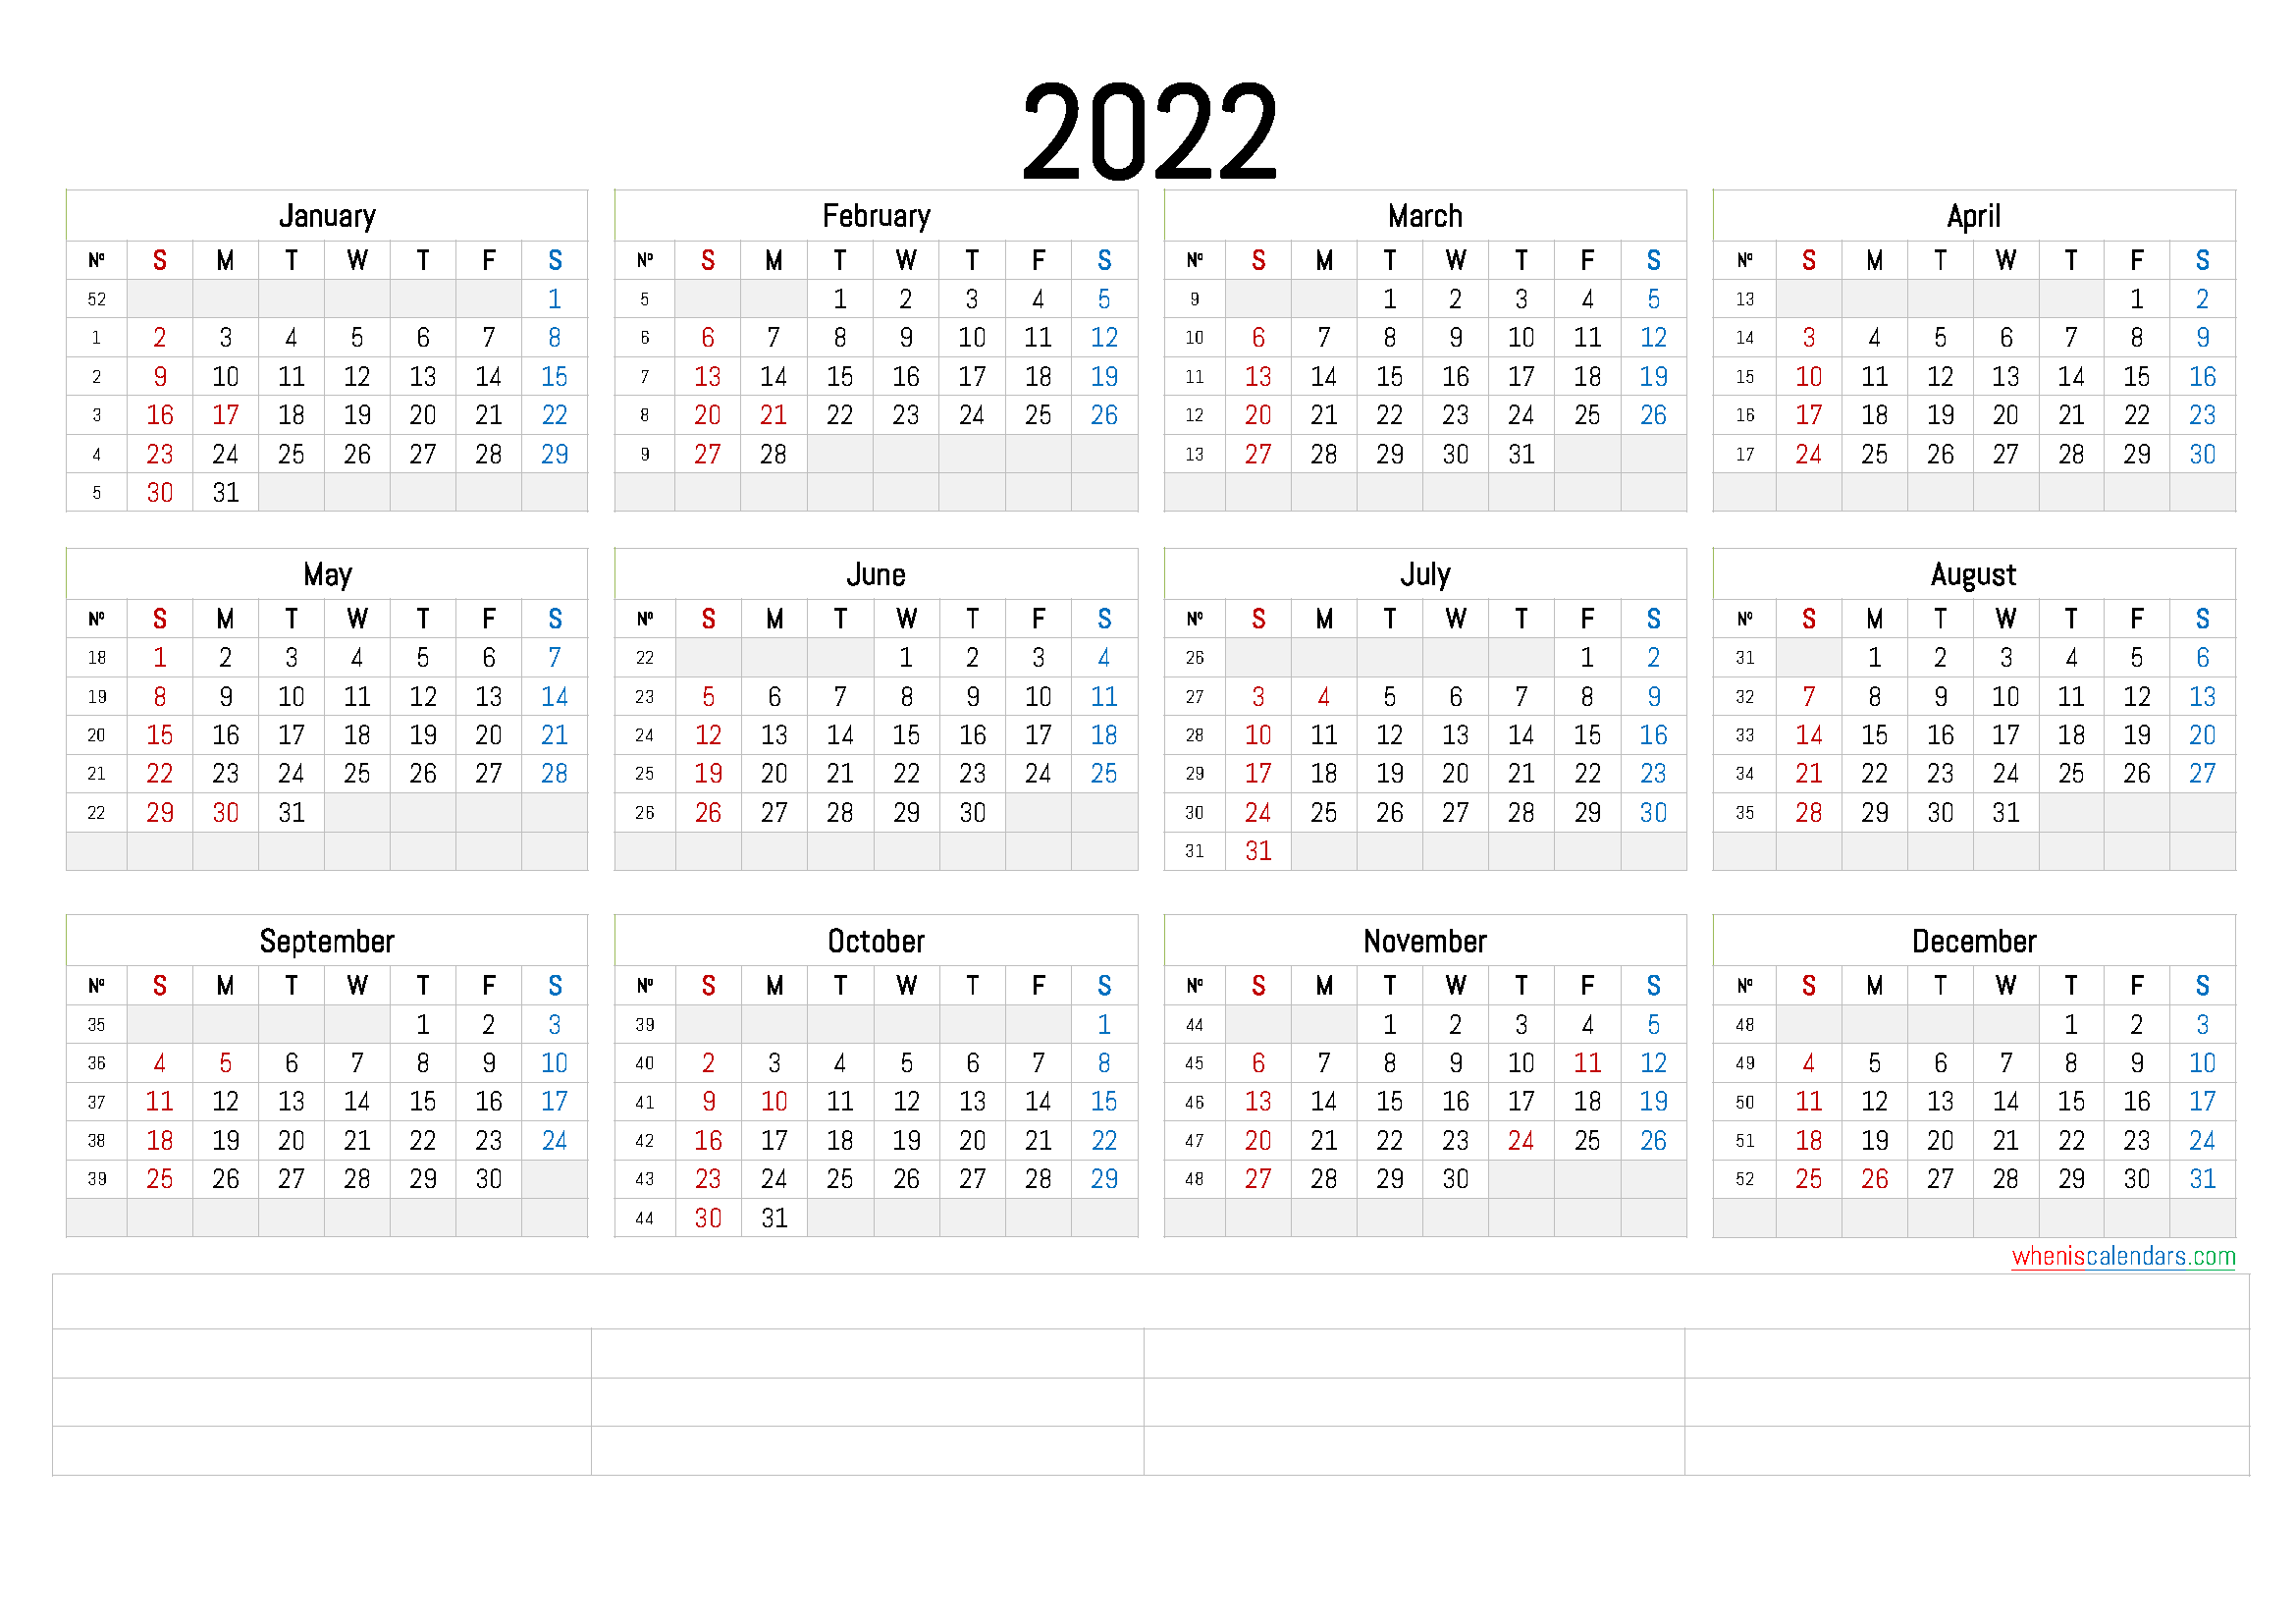 2022 Annual Calendar Printable (6 Templates) - Free ...